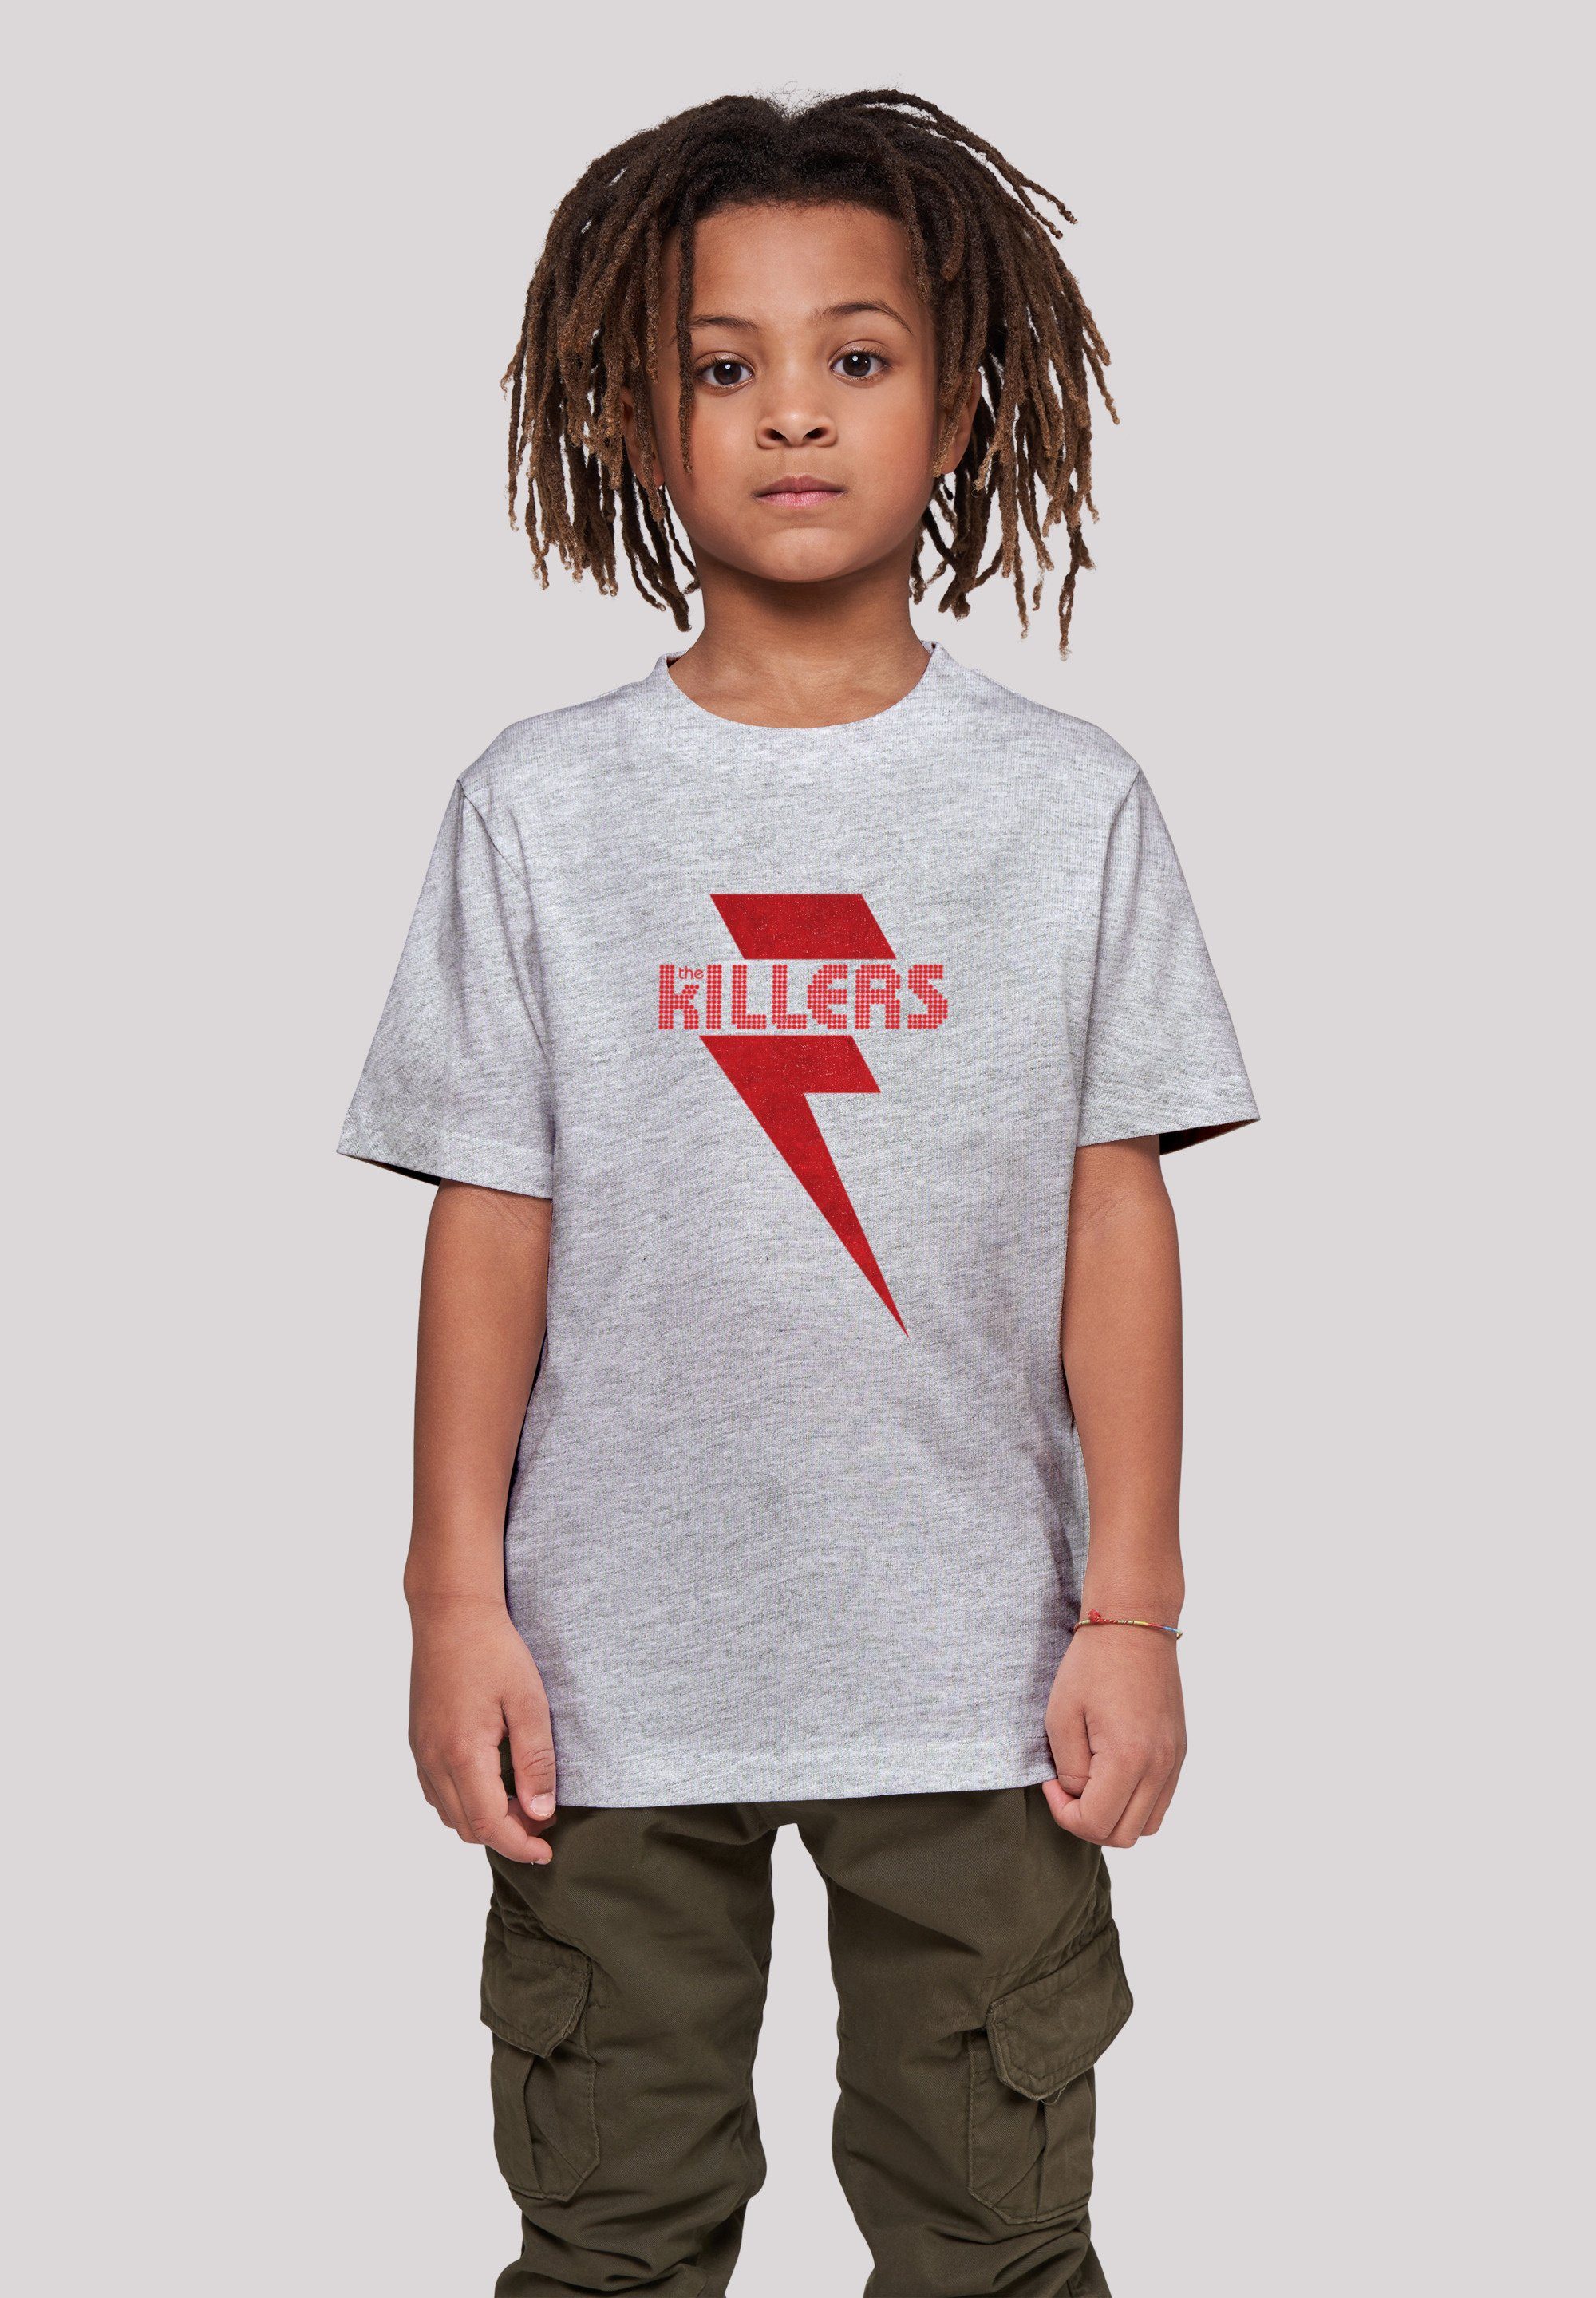 F4NT4STIC T-Shirt The Killers Rock Band Red Bolt Print, Das Model ist 145  cm groß und trägt Größe 145/152